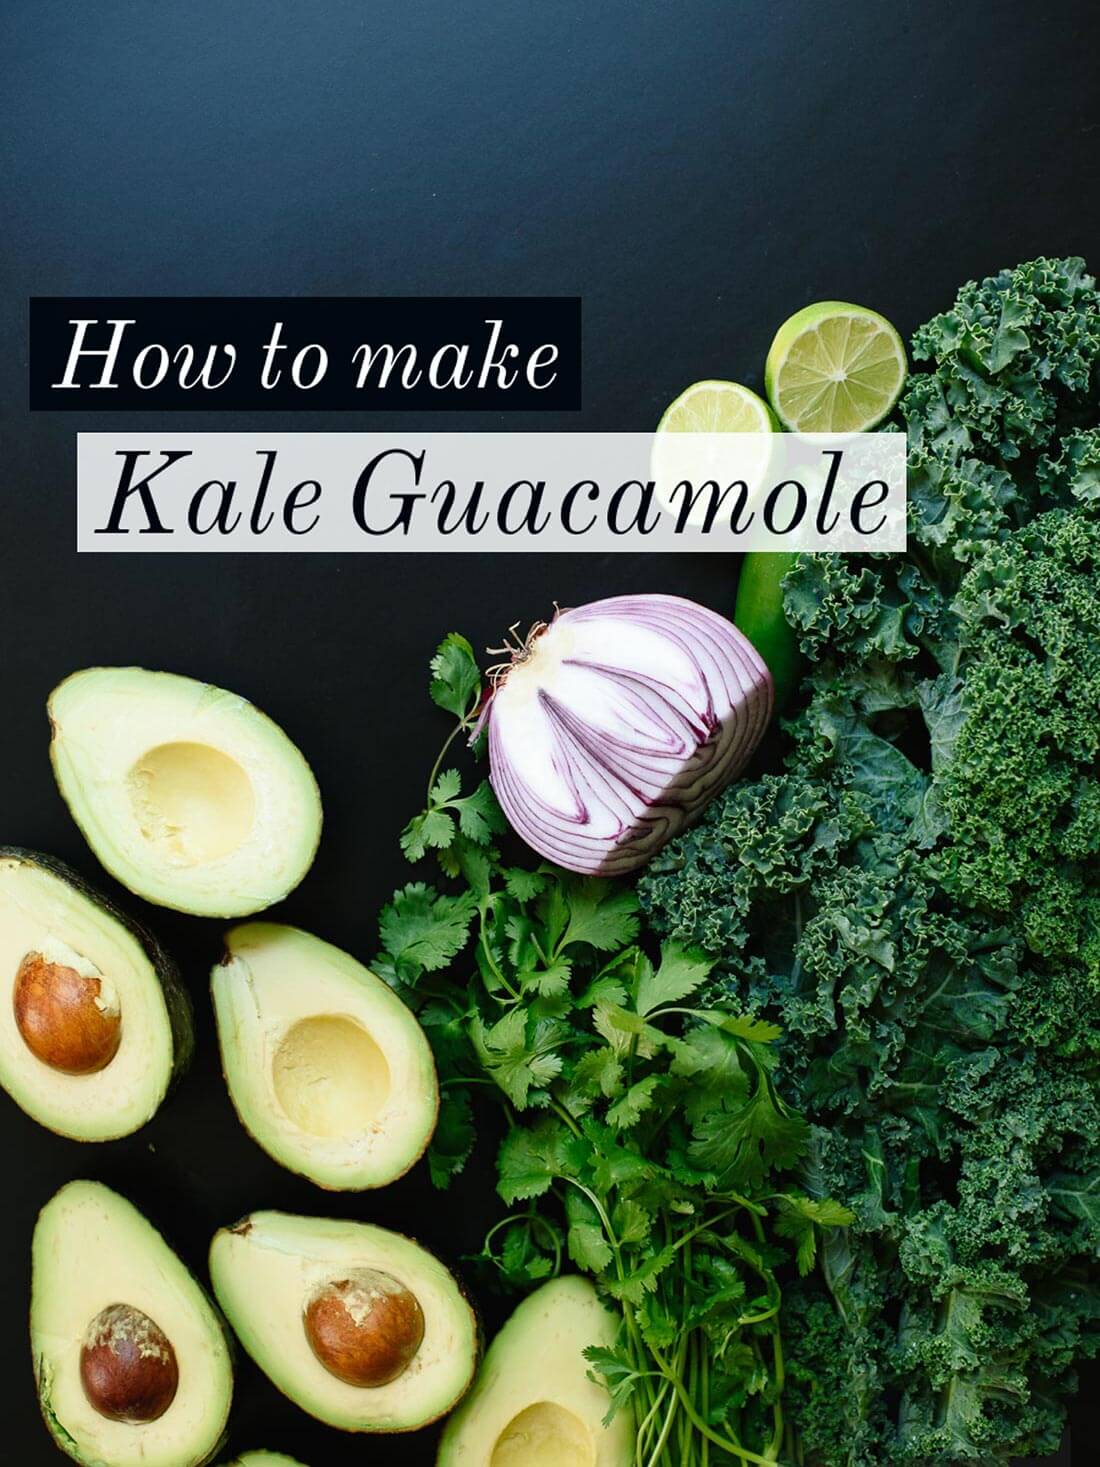 Kale guacamole ingredients - cookieandkate.com